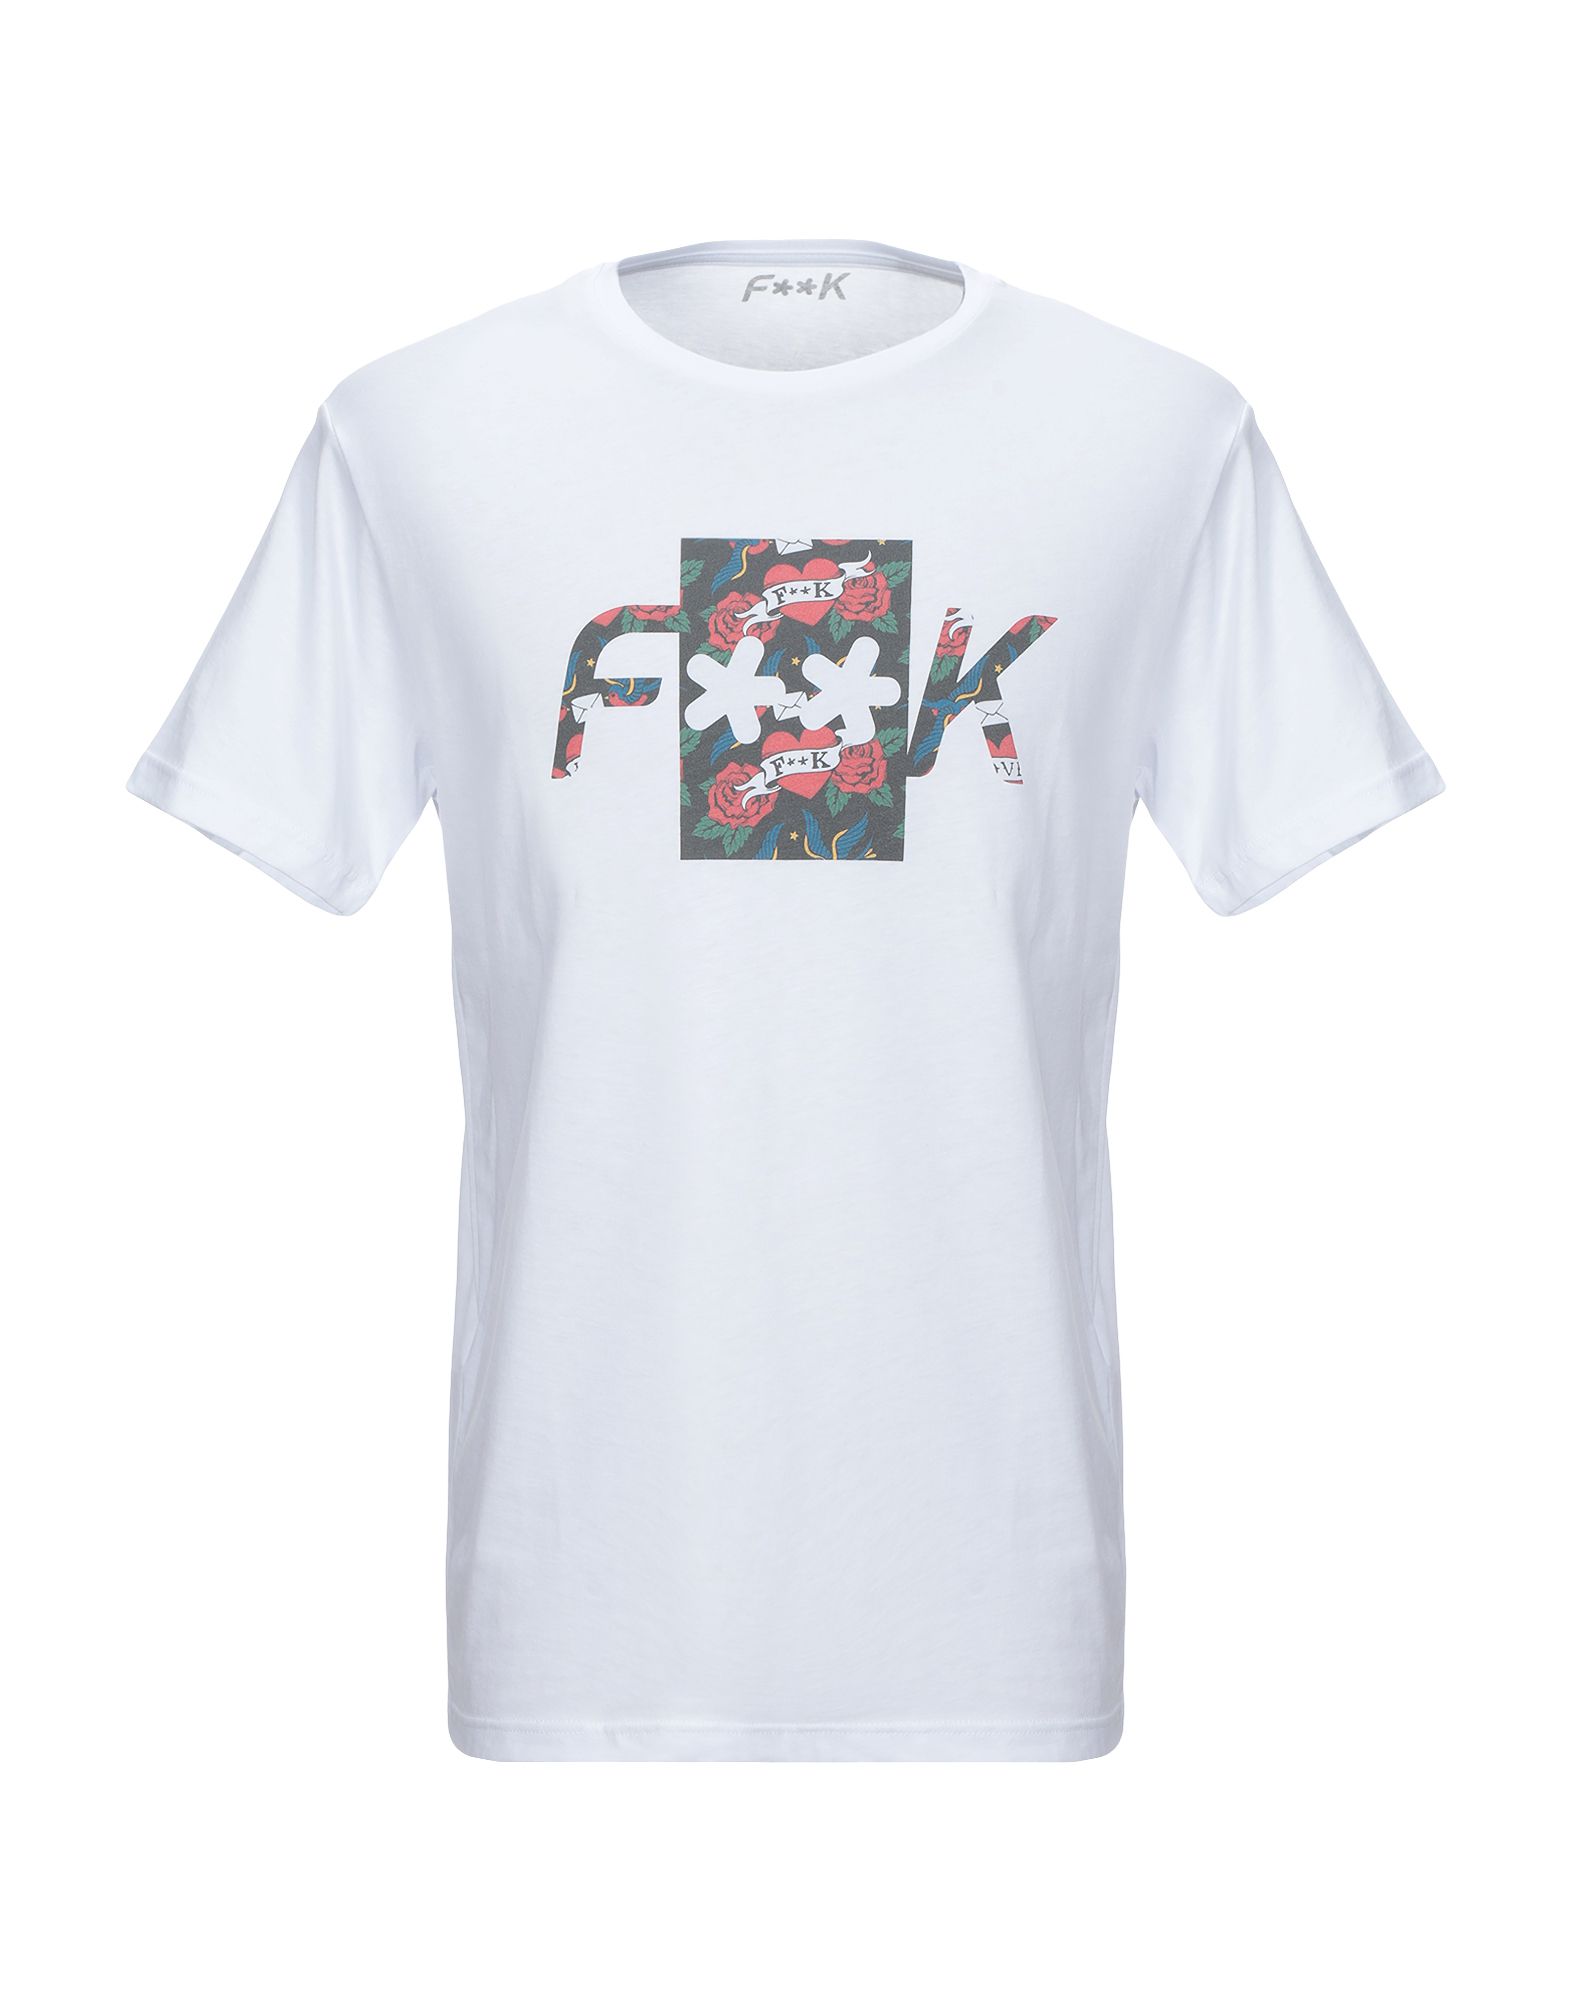 F**k Project Man T-shirt White Size S Cotton